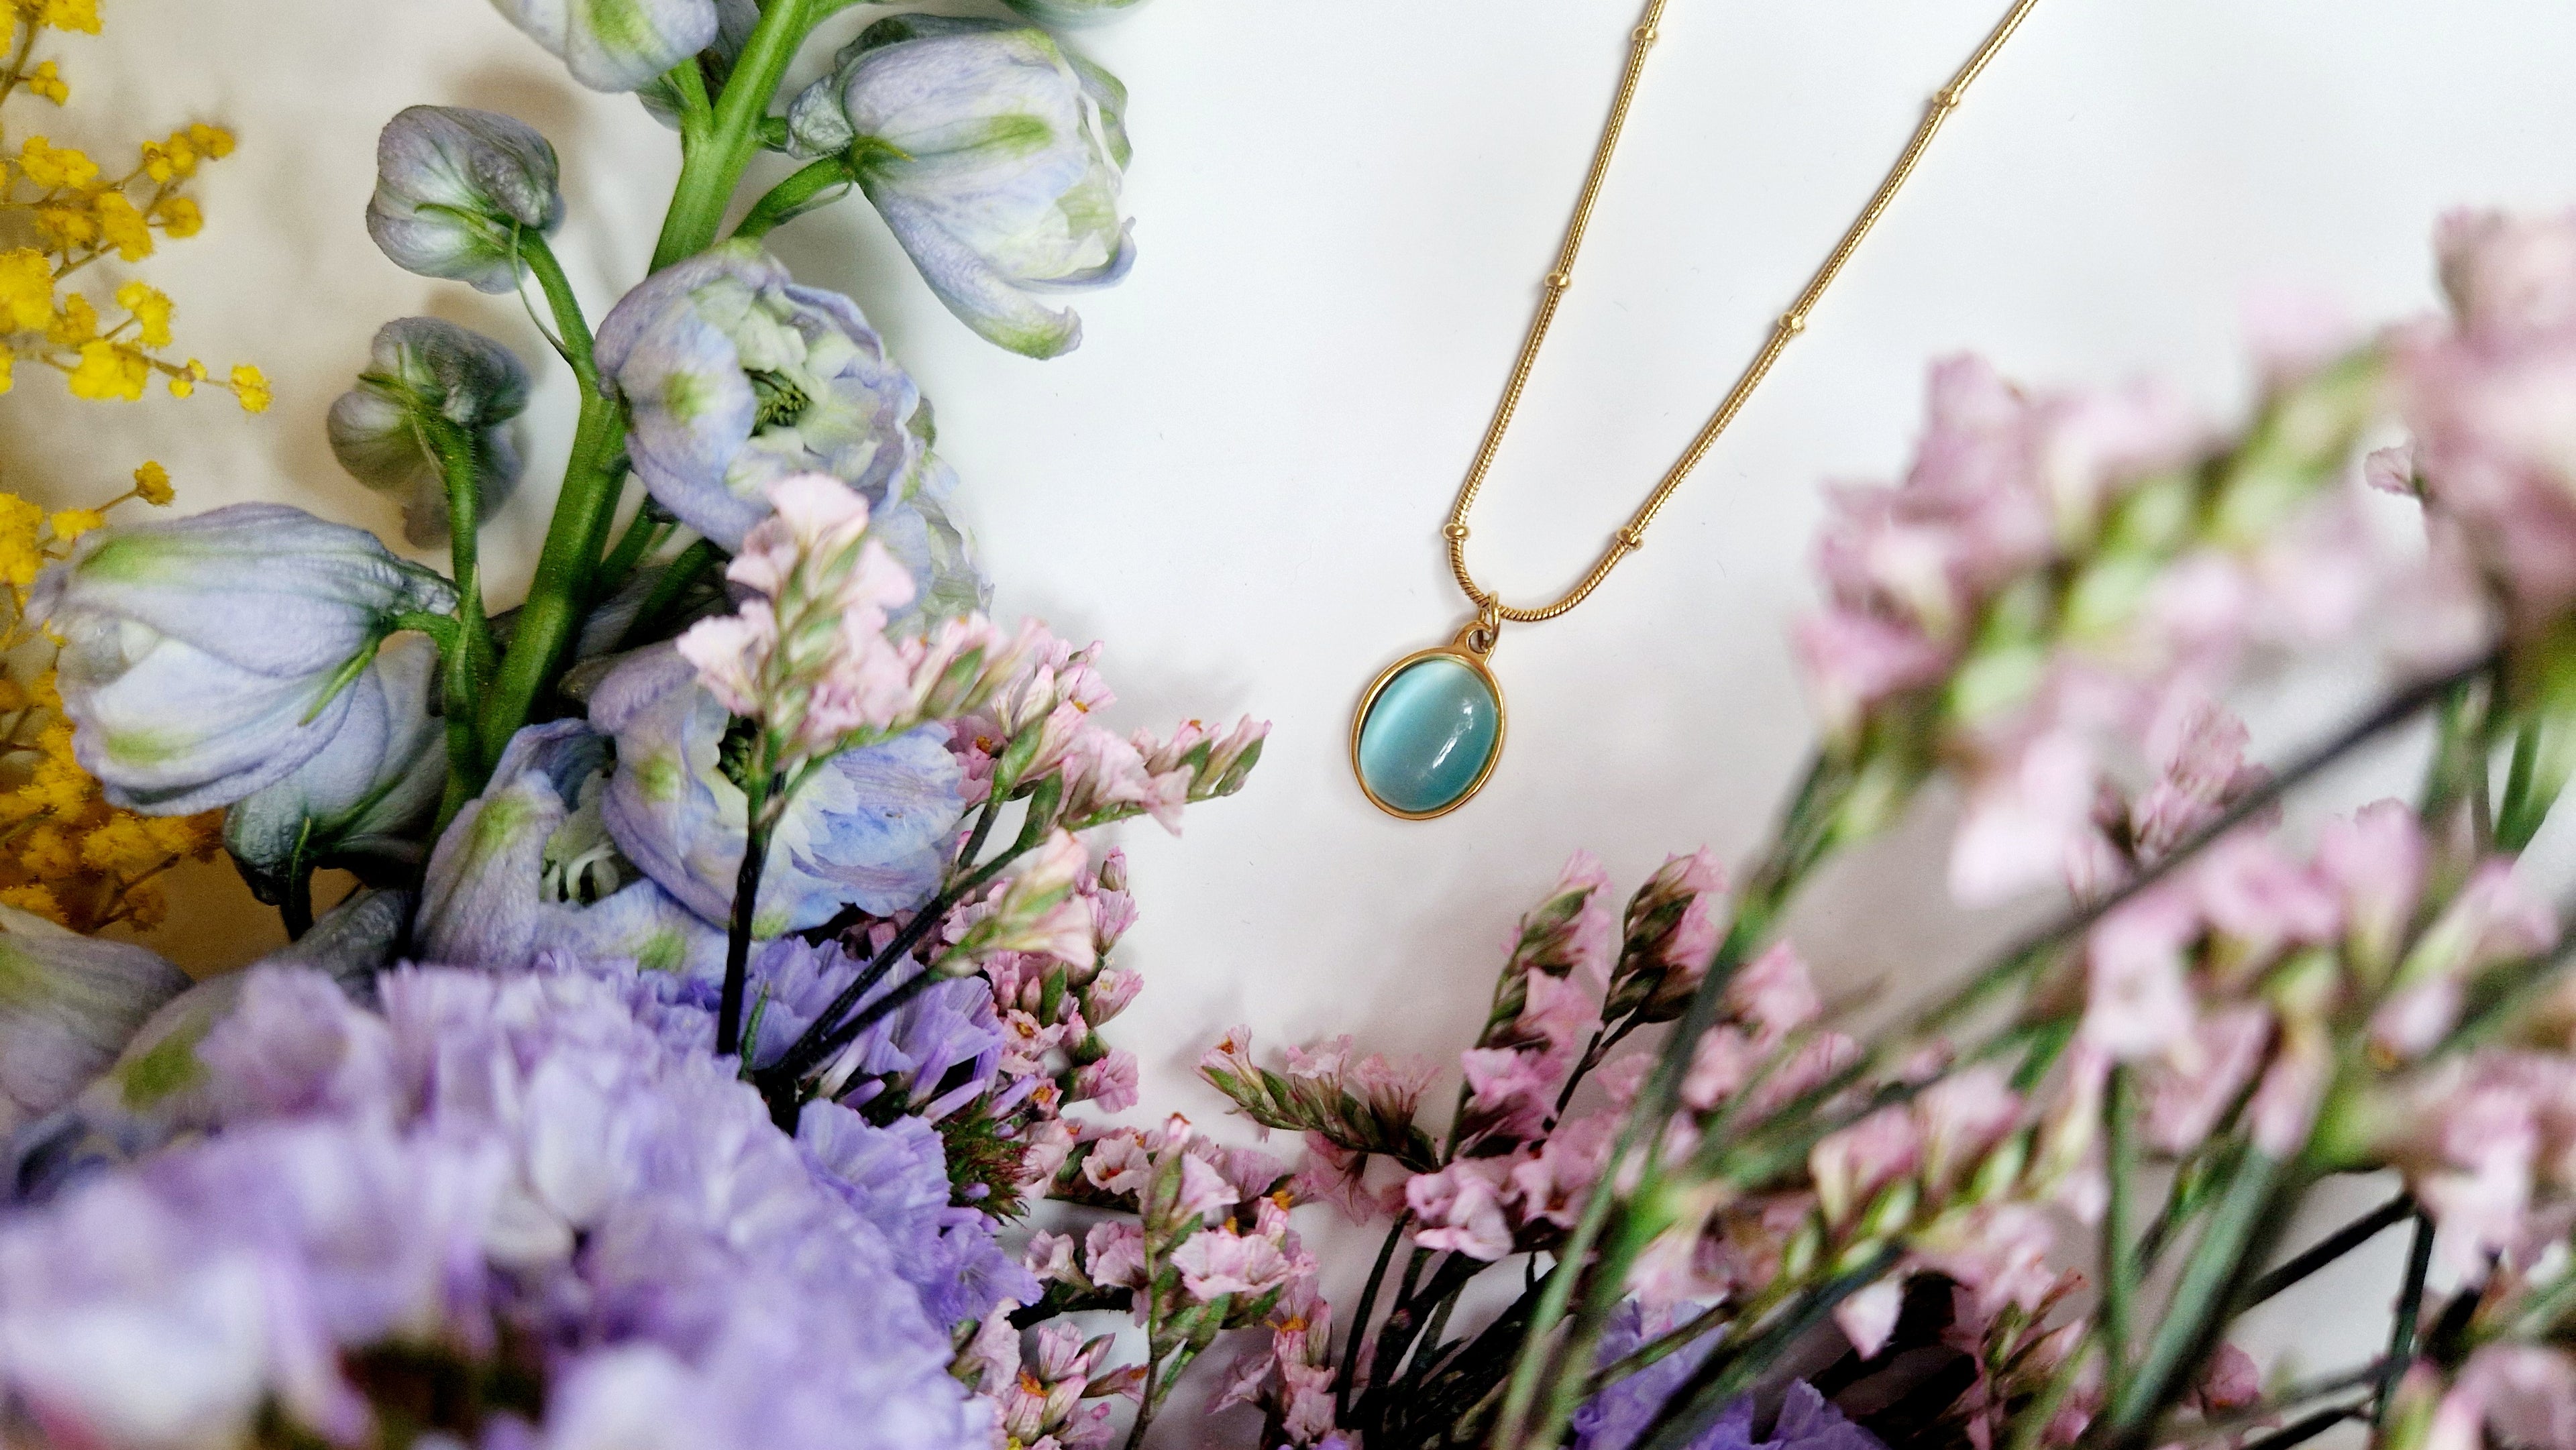 aquamarine gold pendant necklace surrounded by fresh flowers